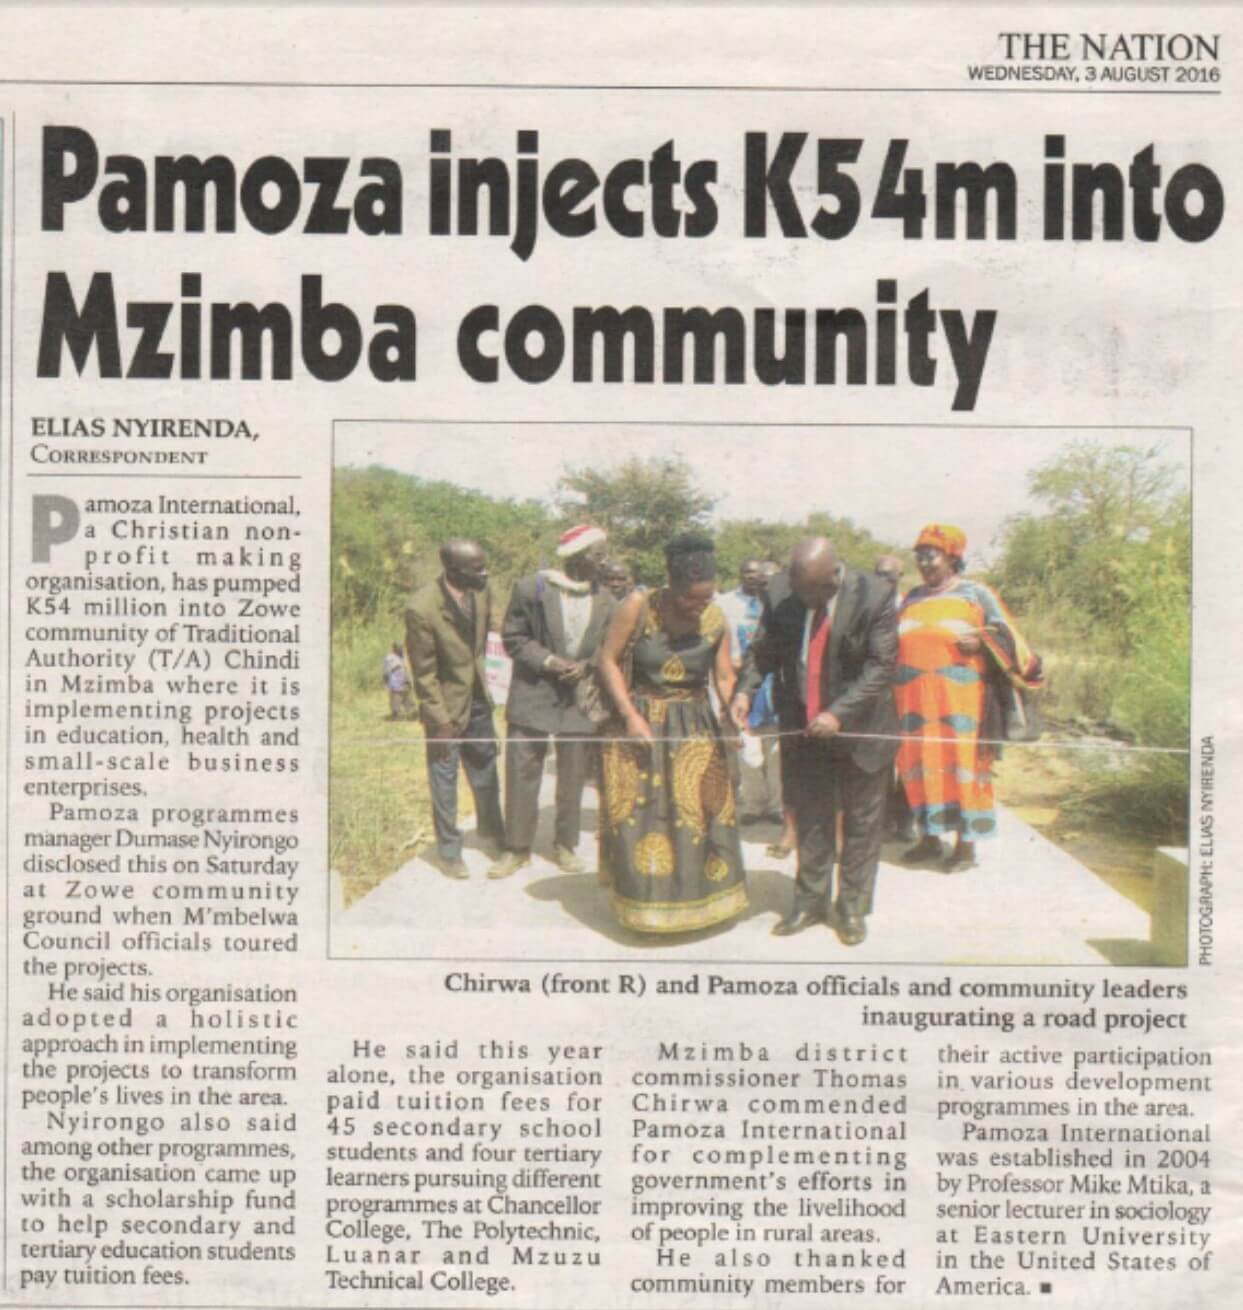 newspaper clipping that reads, "Pamoza injects K54m into Mzimba community."